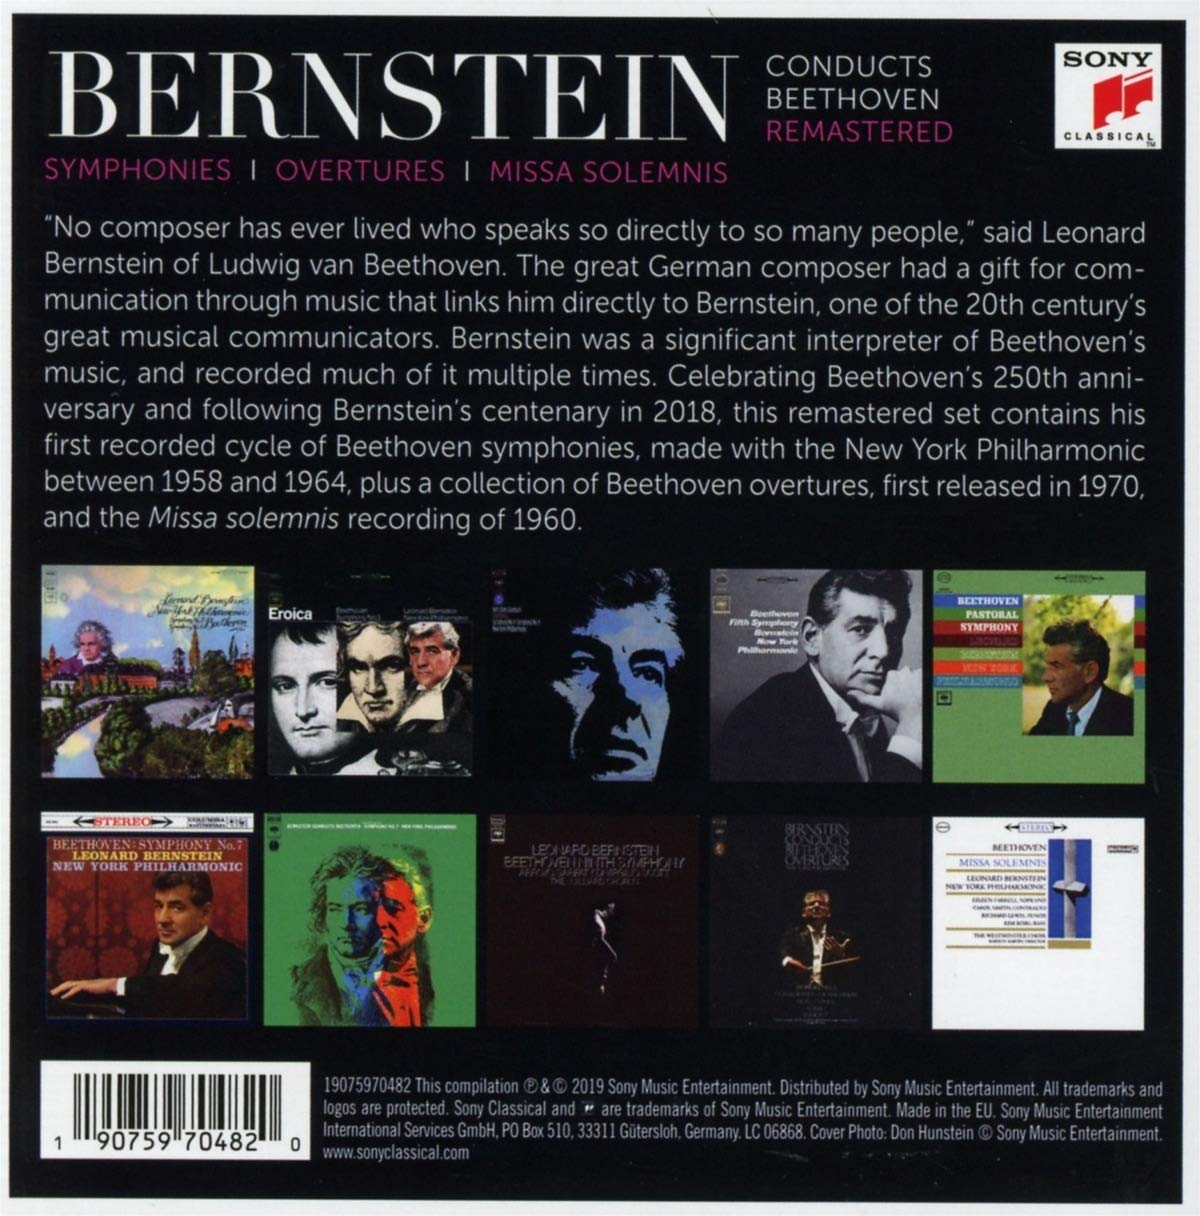 Leonard Bernstein 베토벤: 교향곡 전곡, 서곡, 미사 솔렘니스 - 레너드 번스타인